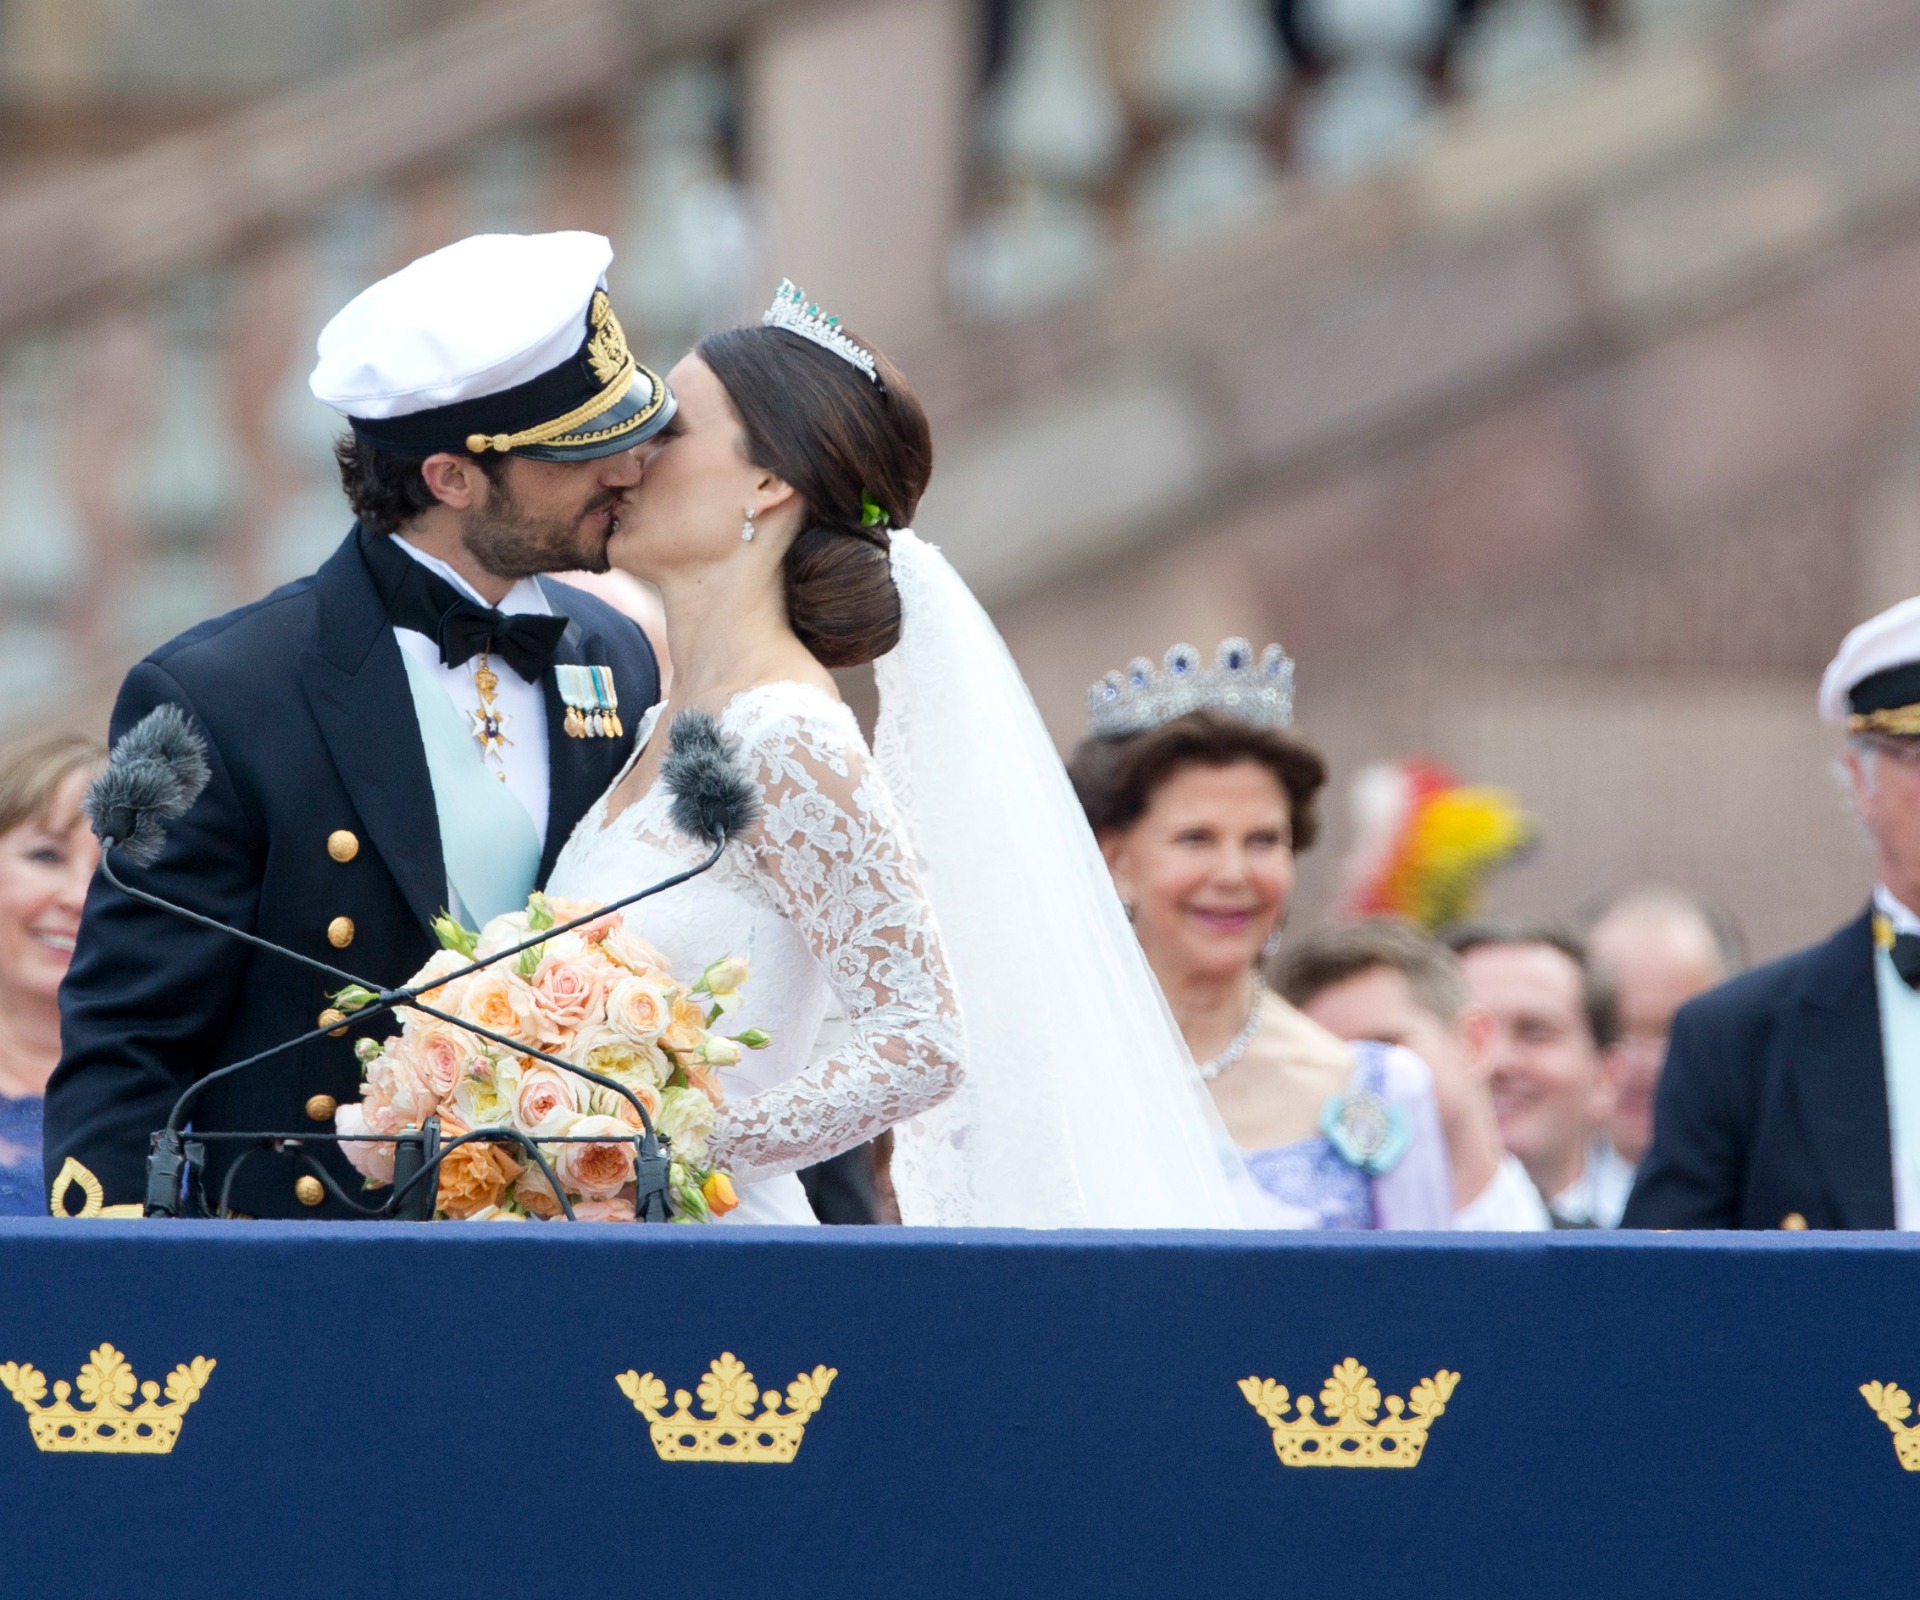 Sofia Hellqvist married Prince Carl Philip